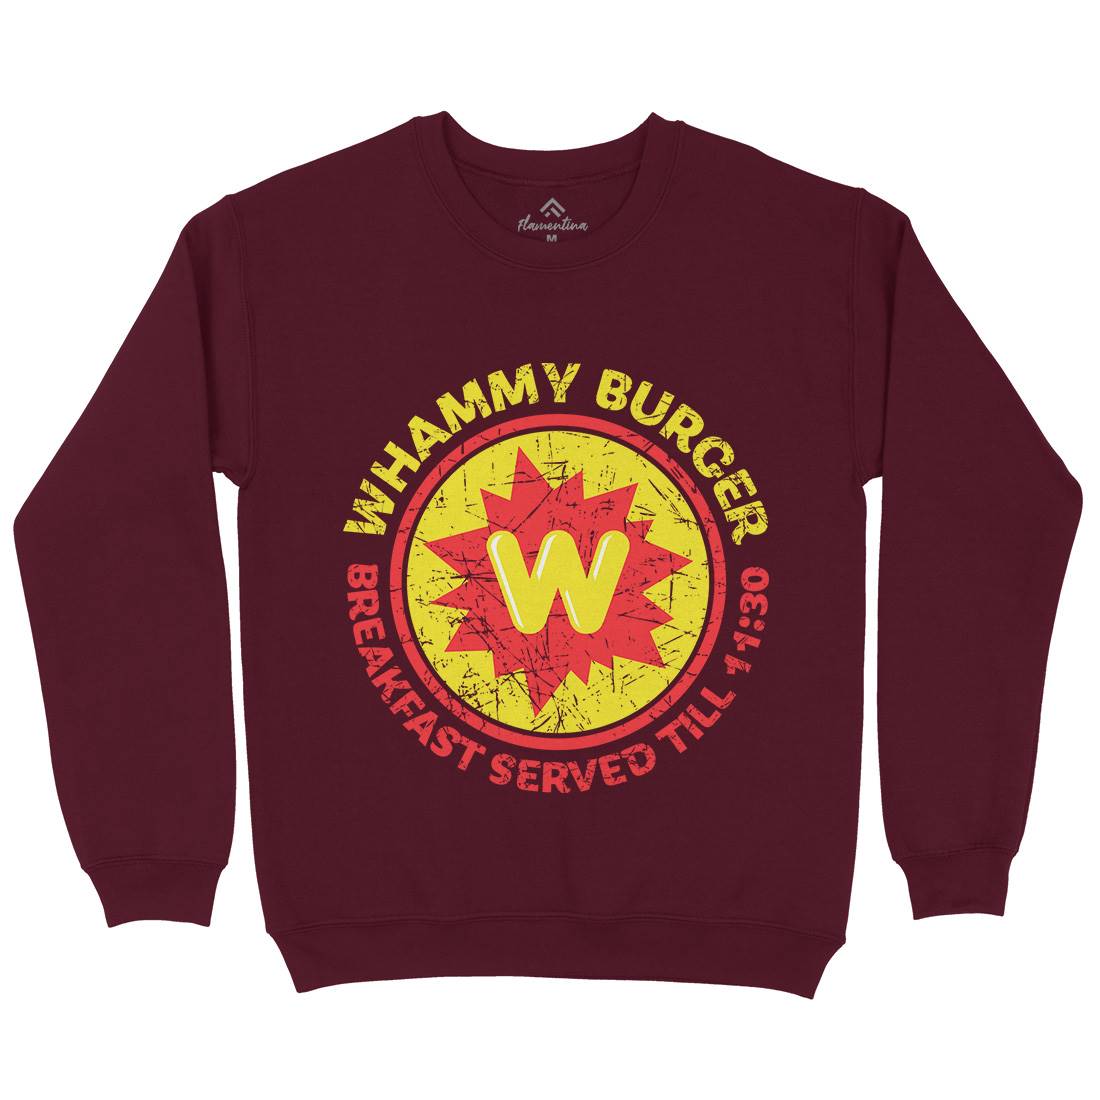 Whammy Burger Kids Crew Neck Sweatshirt Food D286